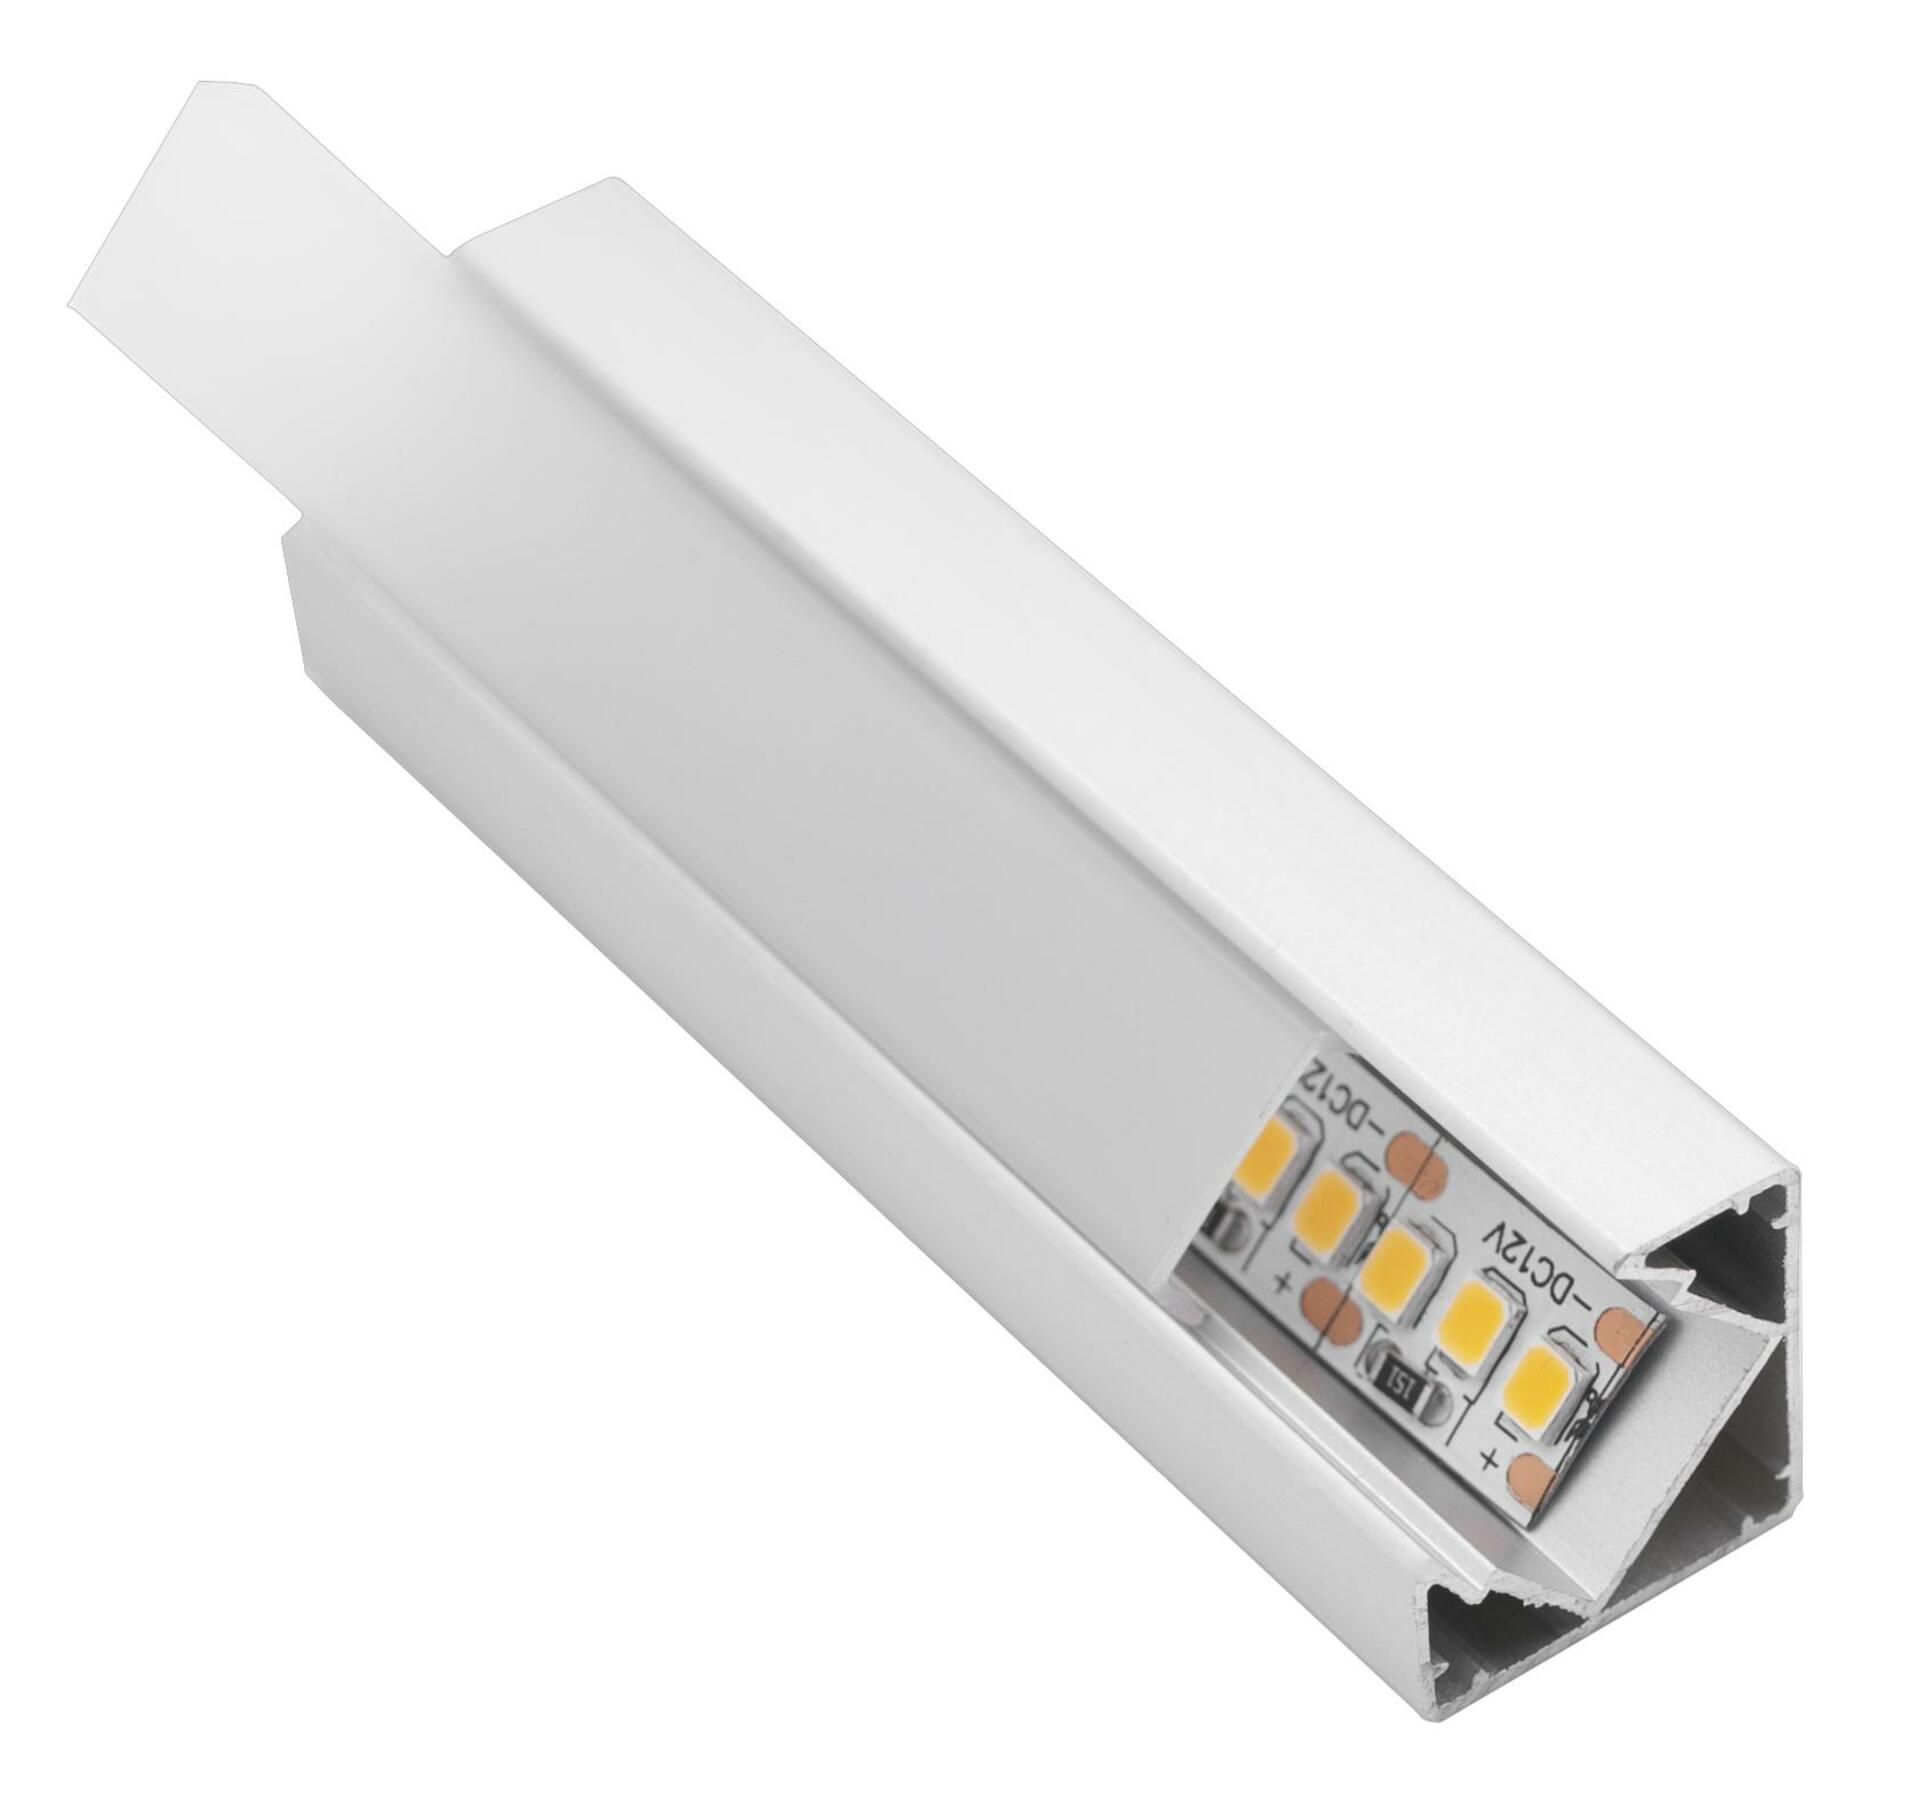 CENTURY AL PROFIL pro LED pásek 10mm rohový opálový kryt 18x18x12mm IP20 délka 2m CEN KPRAN-1818